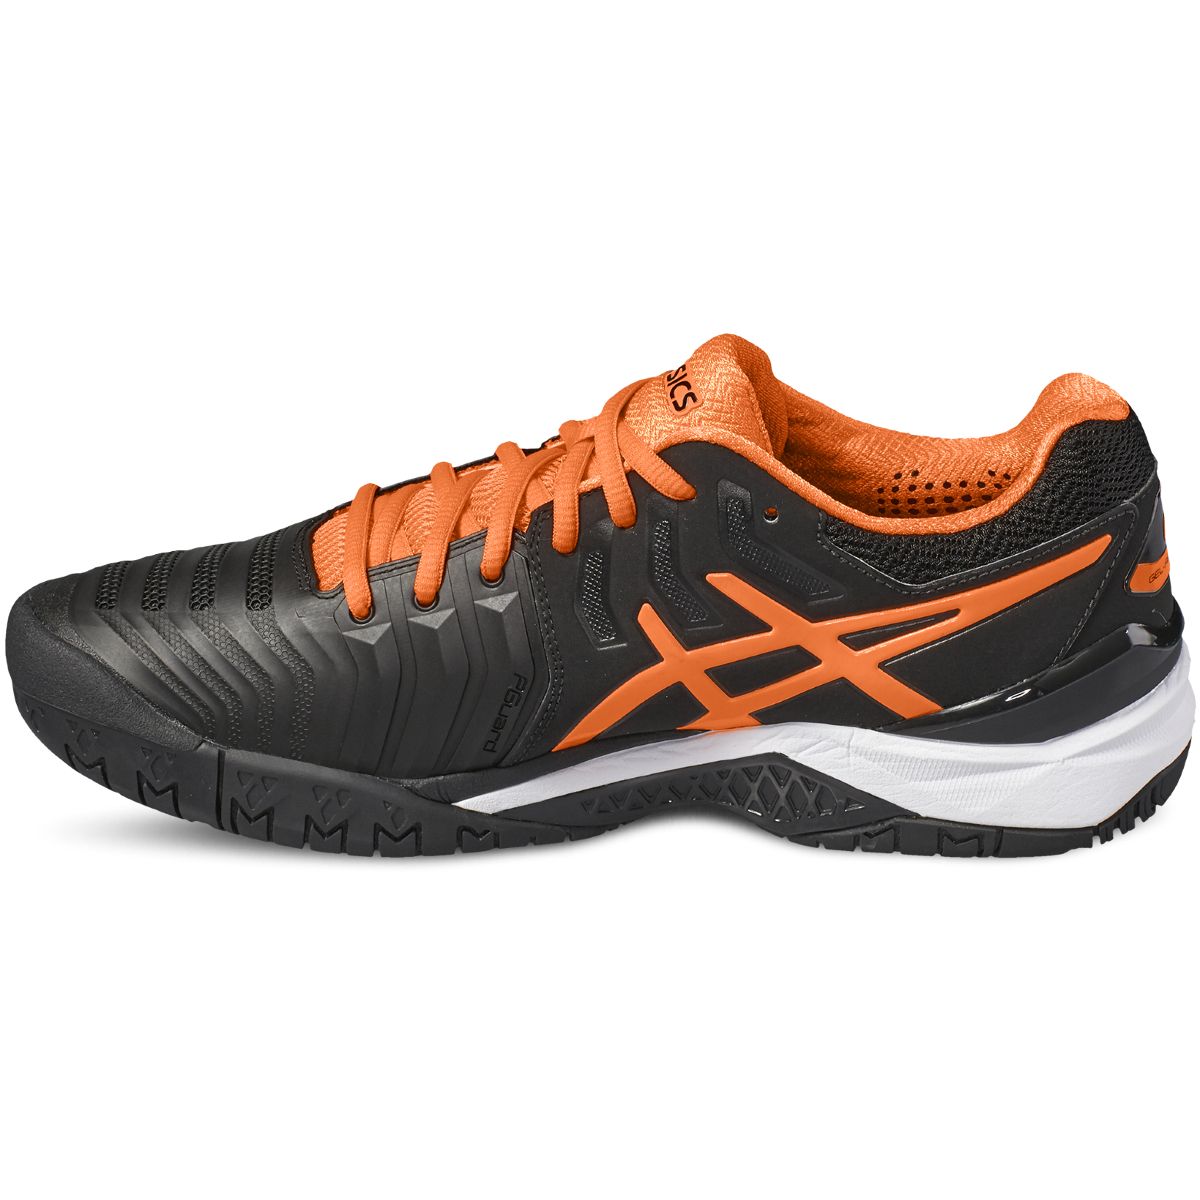 Asics Gel Resolution 7 Men's Tennis Shoes E701Y-9030